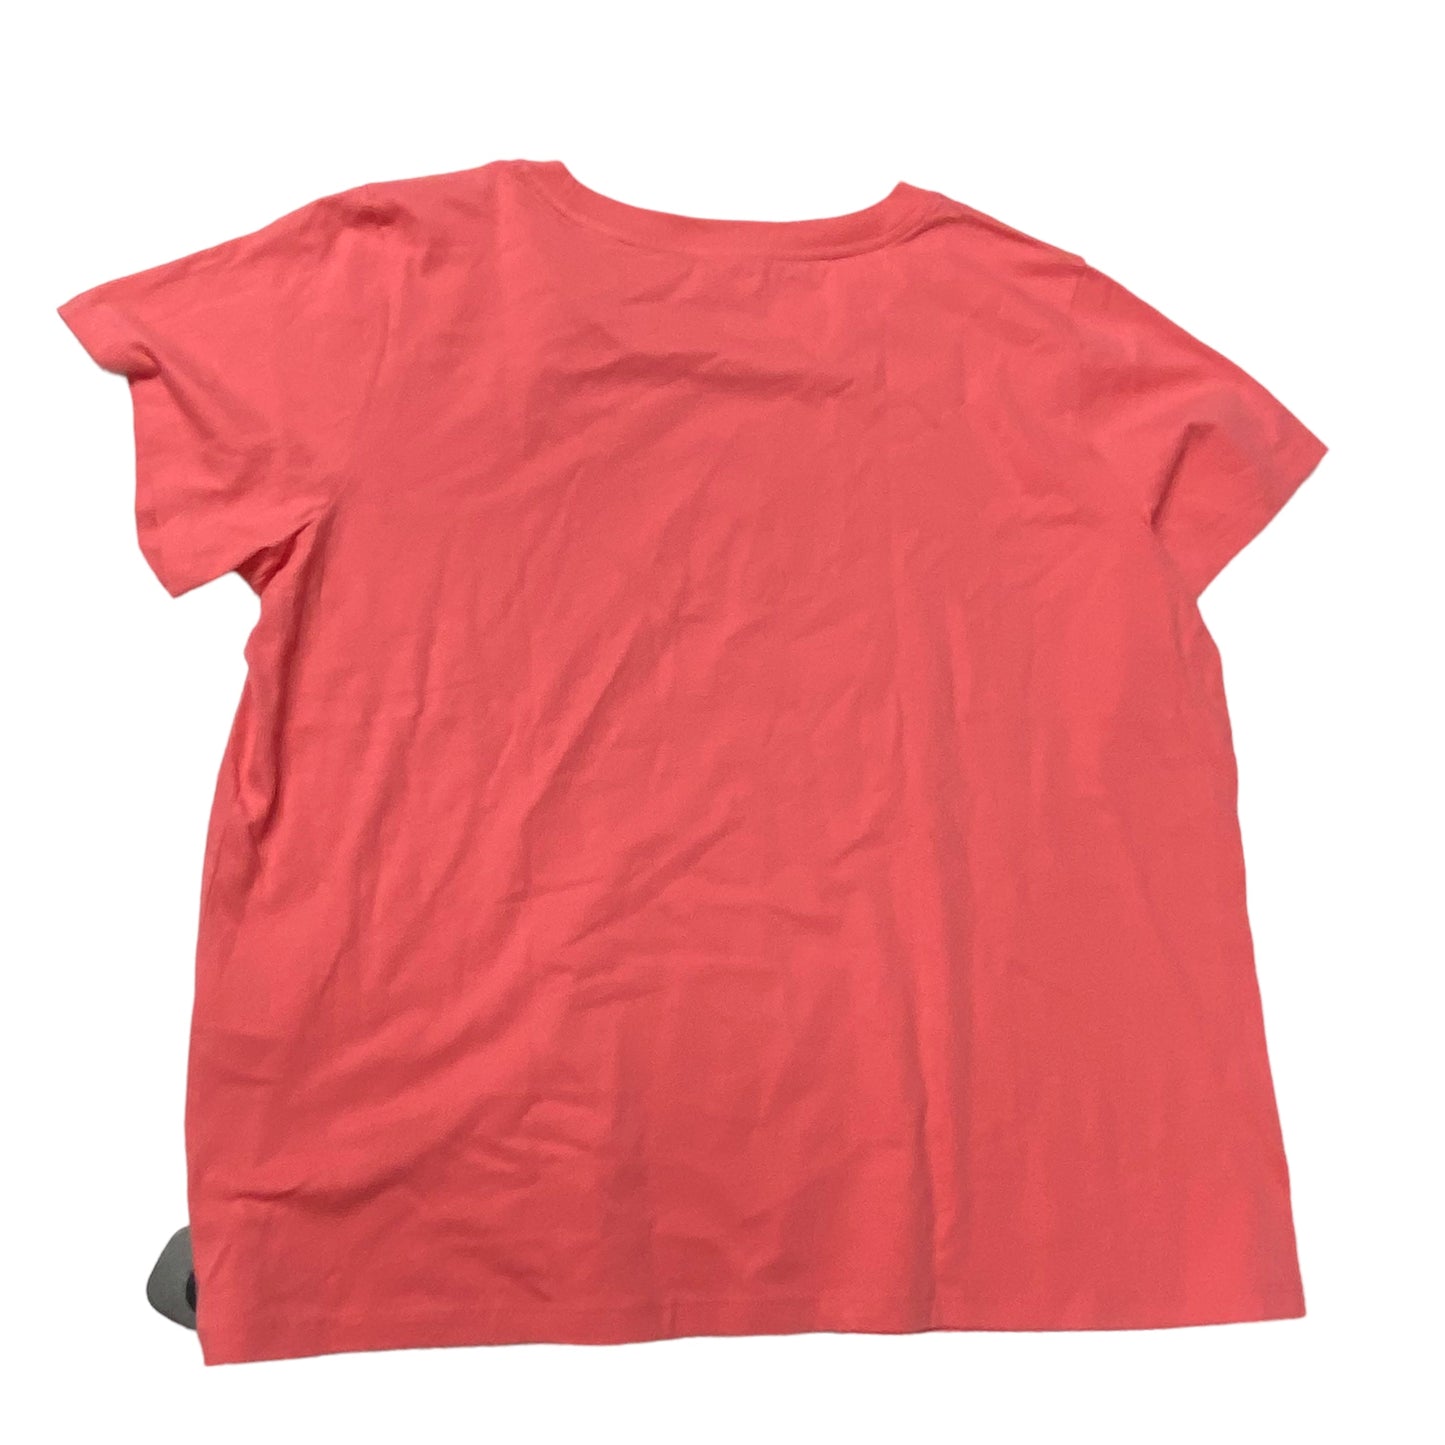 Pink Top Short Sleeve Basic Levis, Size 1x